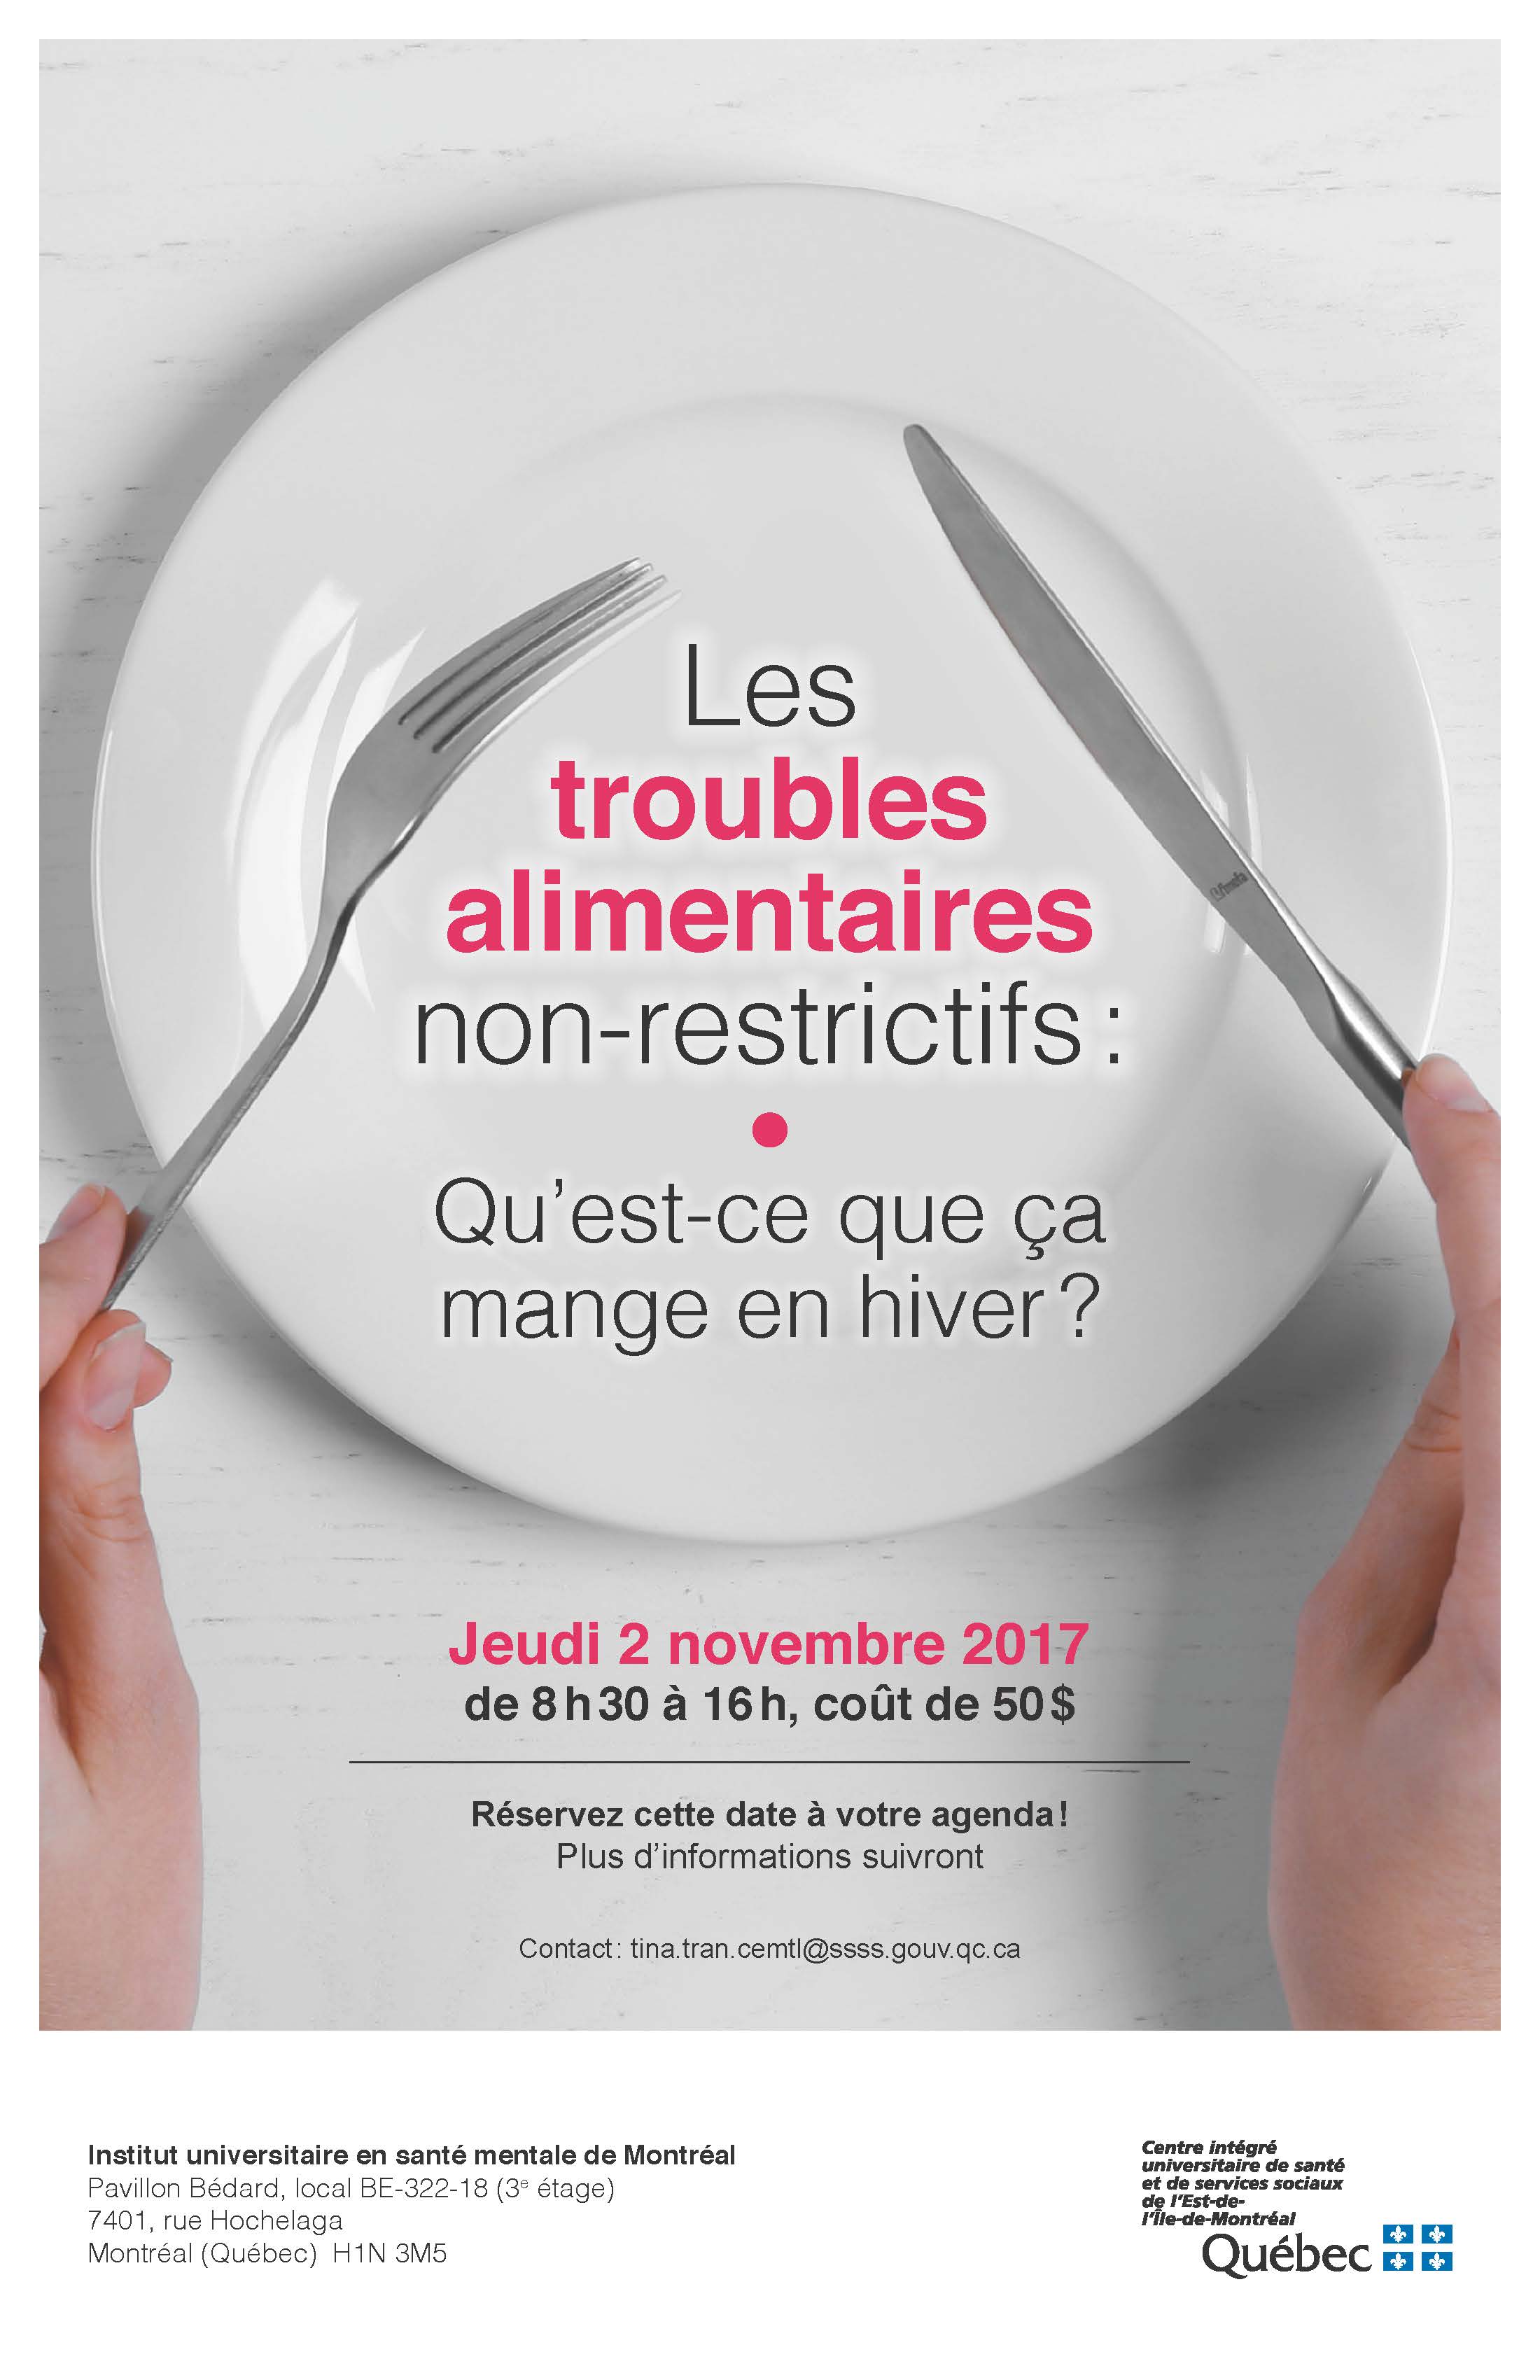 Les troubles alimentaires non-restrictifs - Colloque au IUSMM/UdeM - 2 novembre 2017 - Vincenzo Di Nicola/IUSMM/UdeM